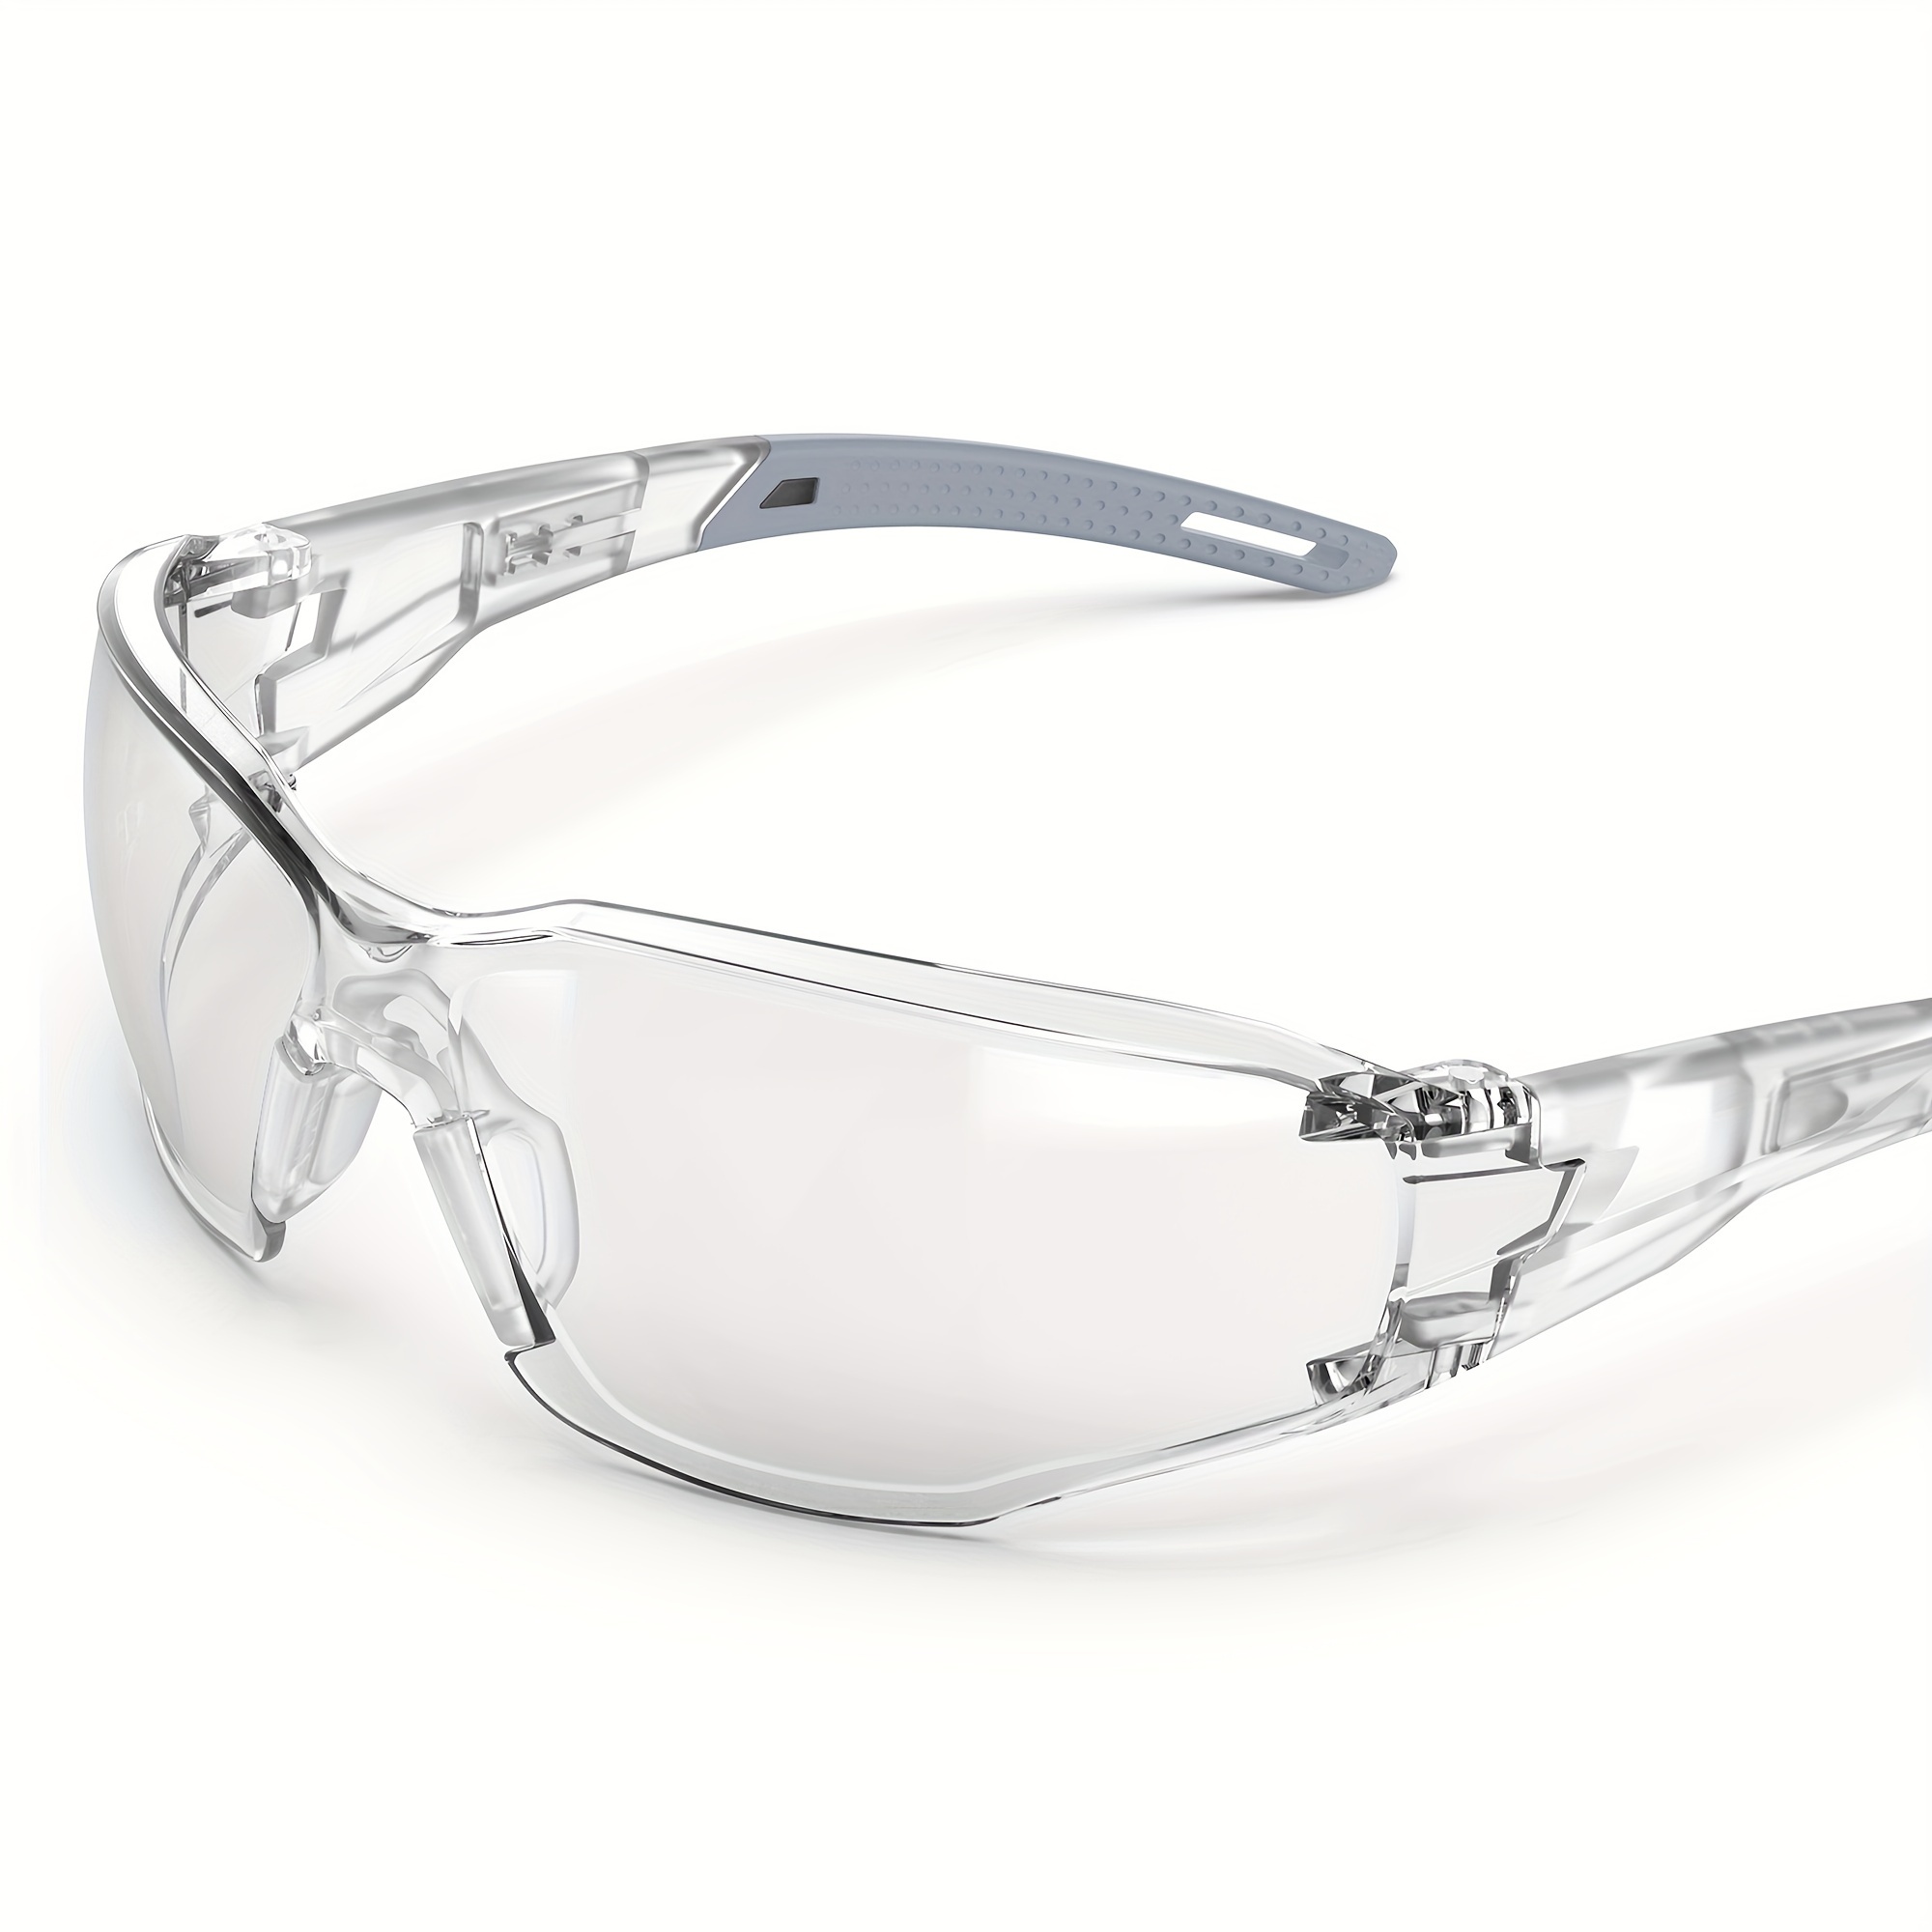 img.kwcdn.com/product/laiyike-safety-glasses-goggl